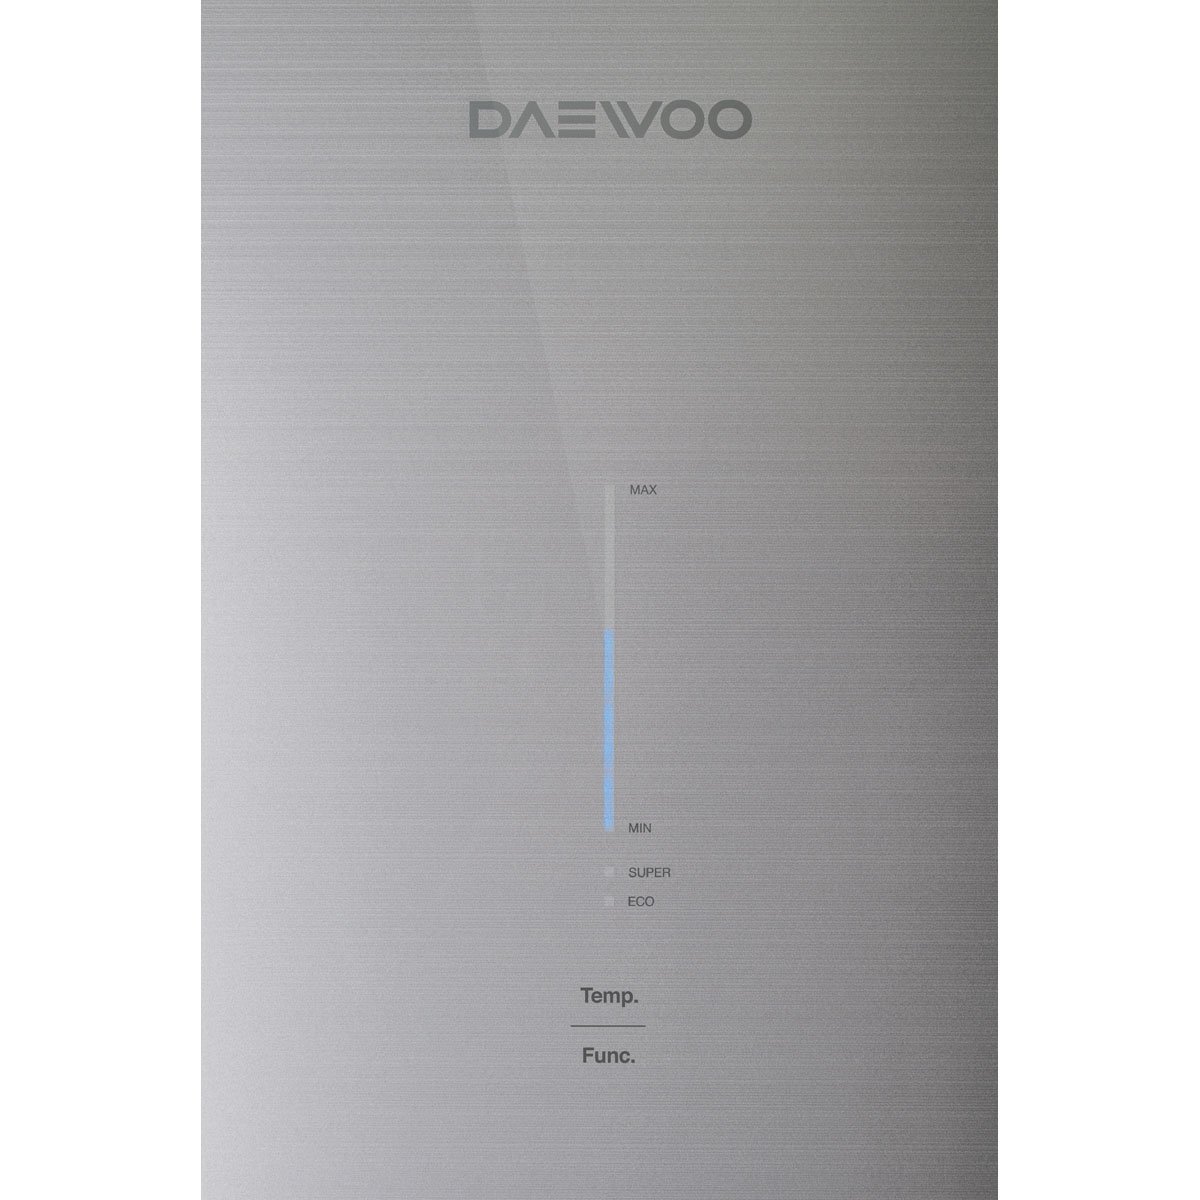 Refrigerador Daewoo Button 13Pies Rct-360Nsg Silver